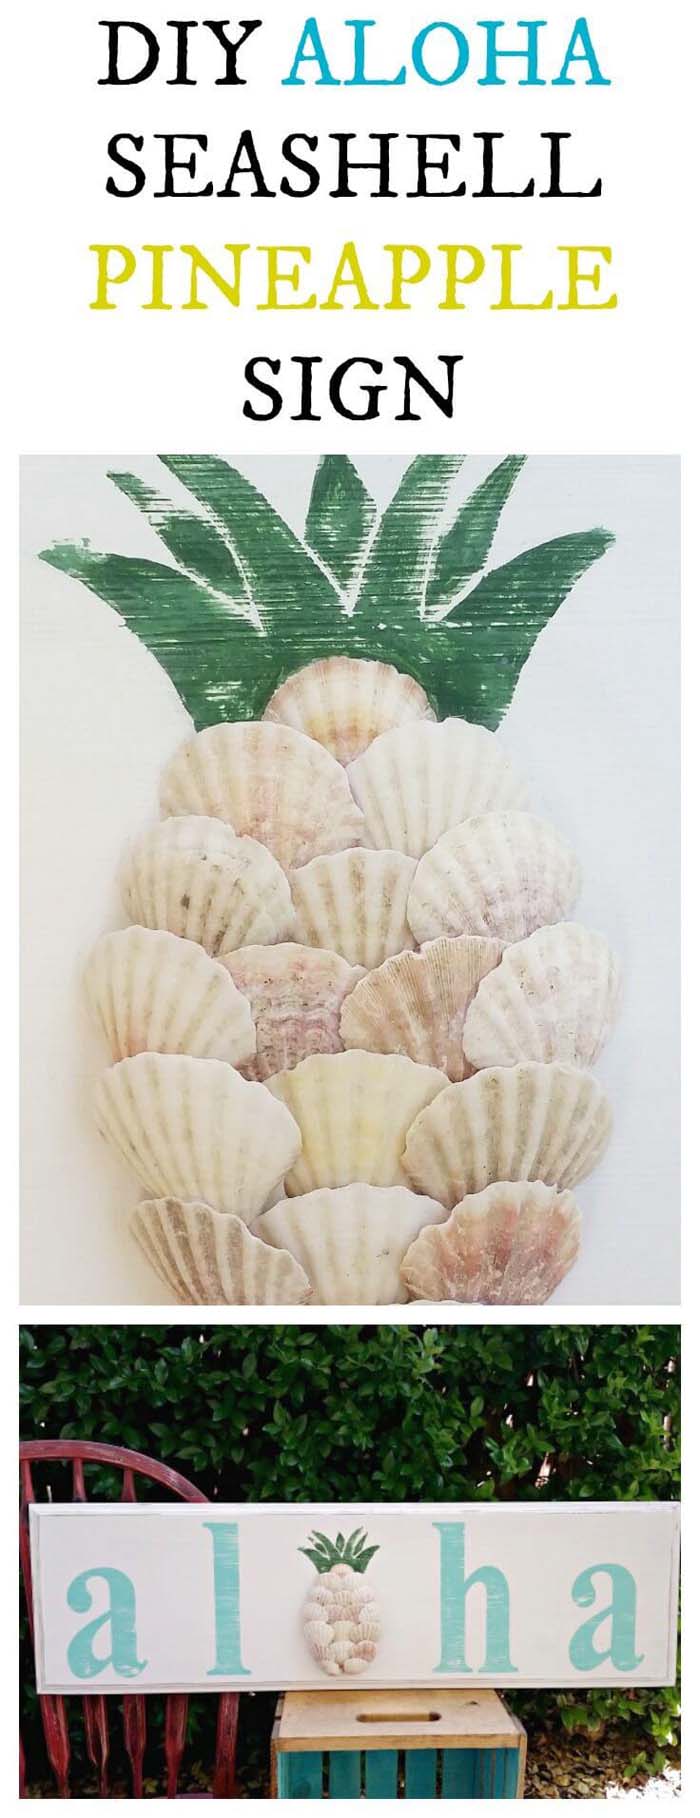 DIY Aloha Seashell Pineapple Sign #diy #seashell #decor #decorhomeideas